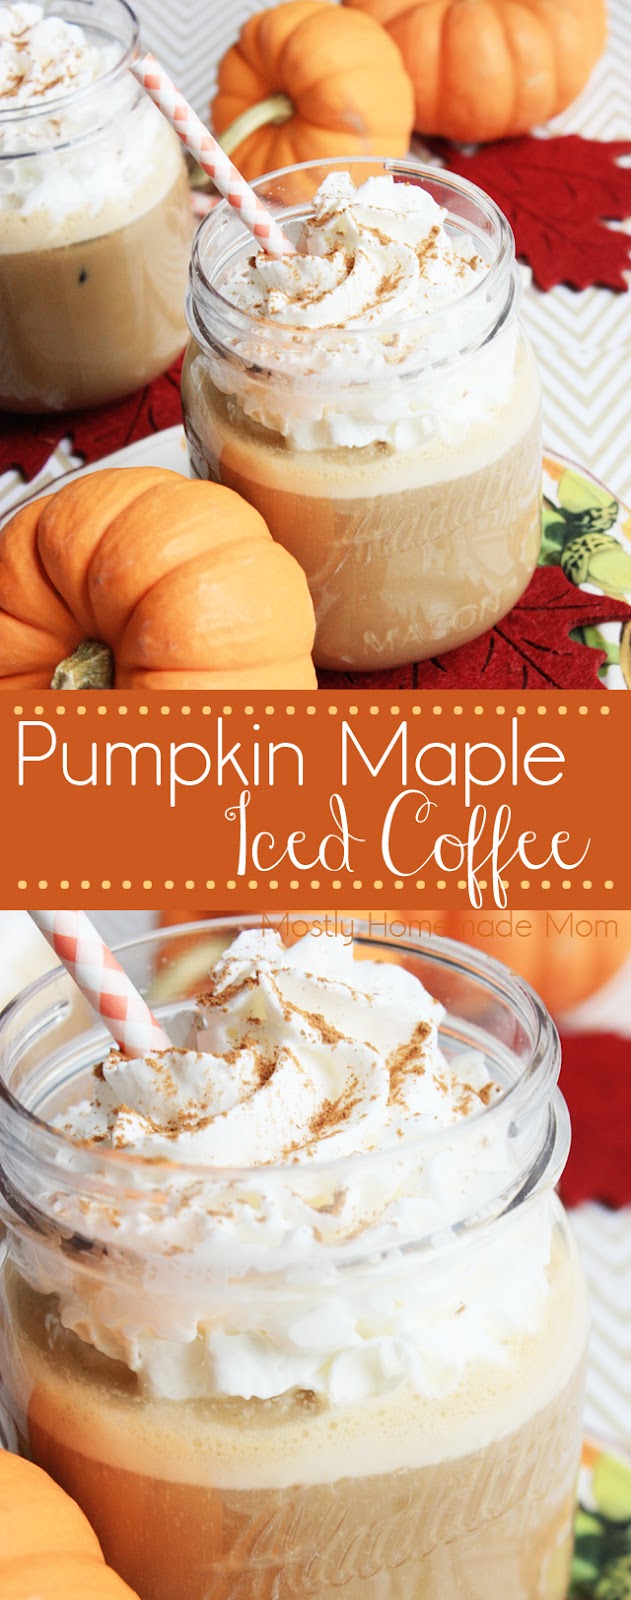 Pumpkin Maple Iced Coffee | Mostly Homemade Mom